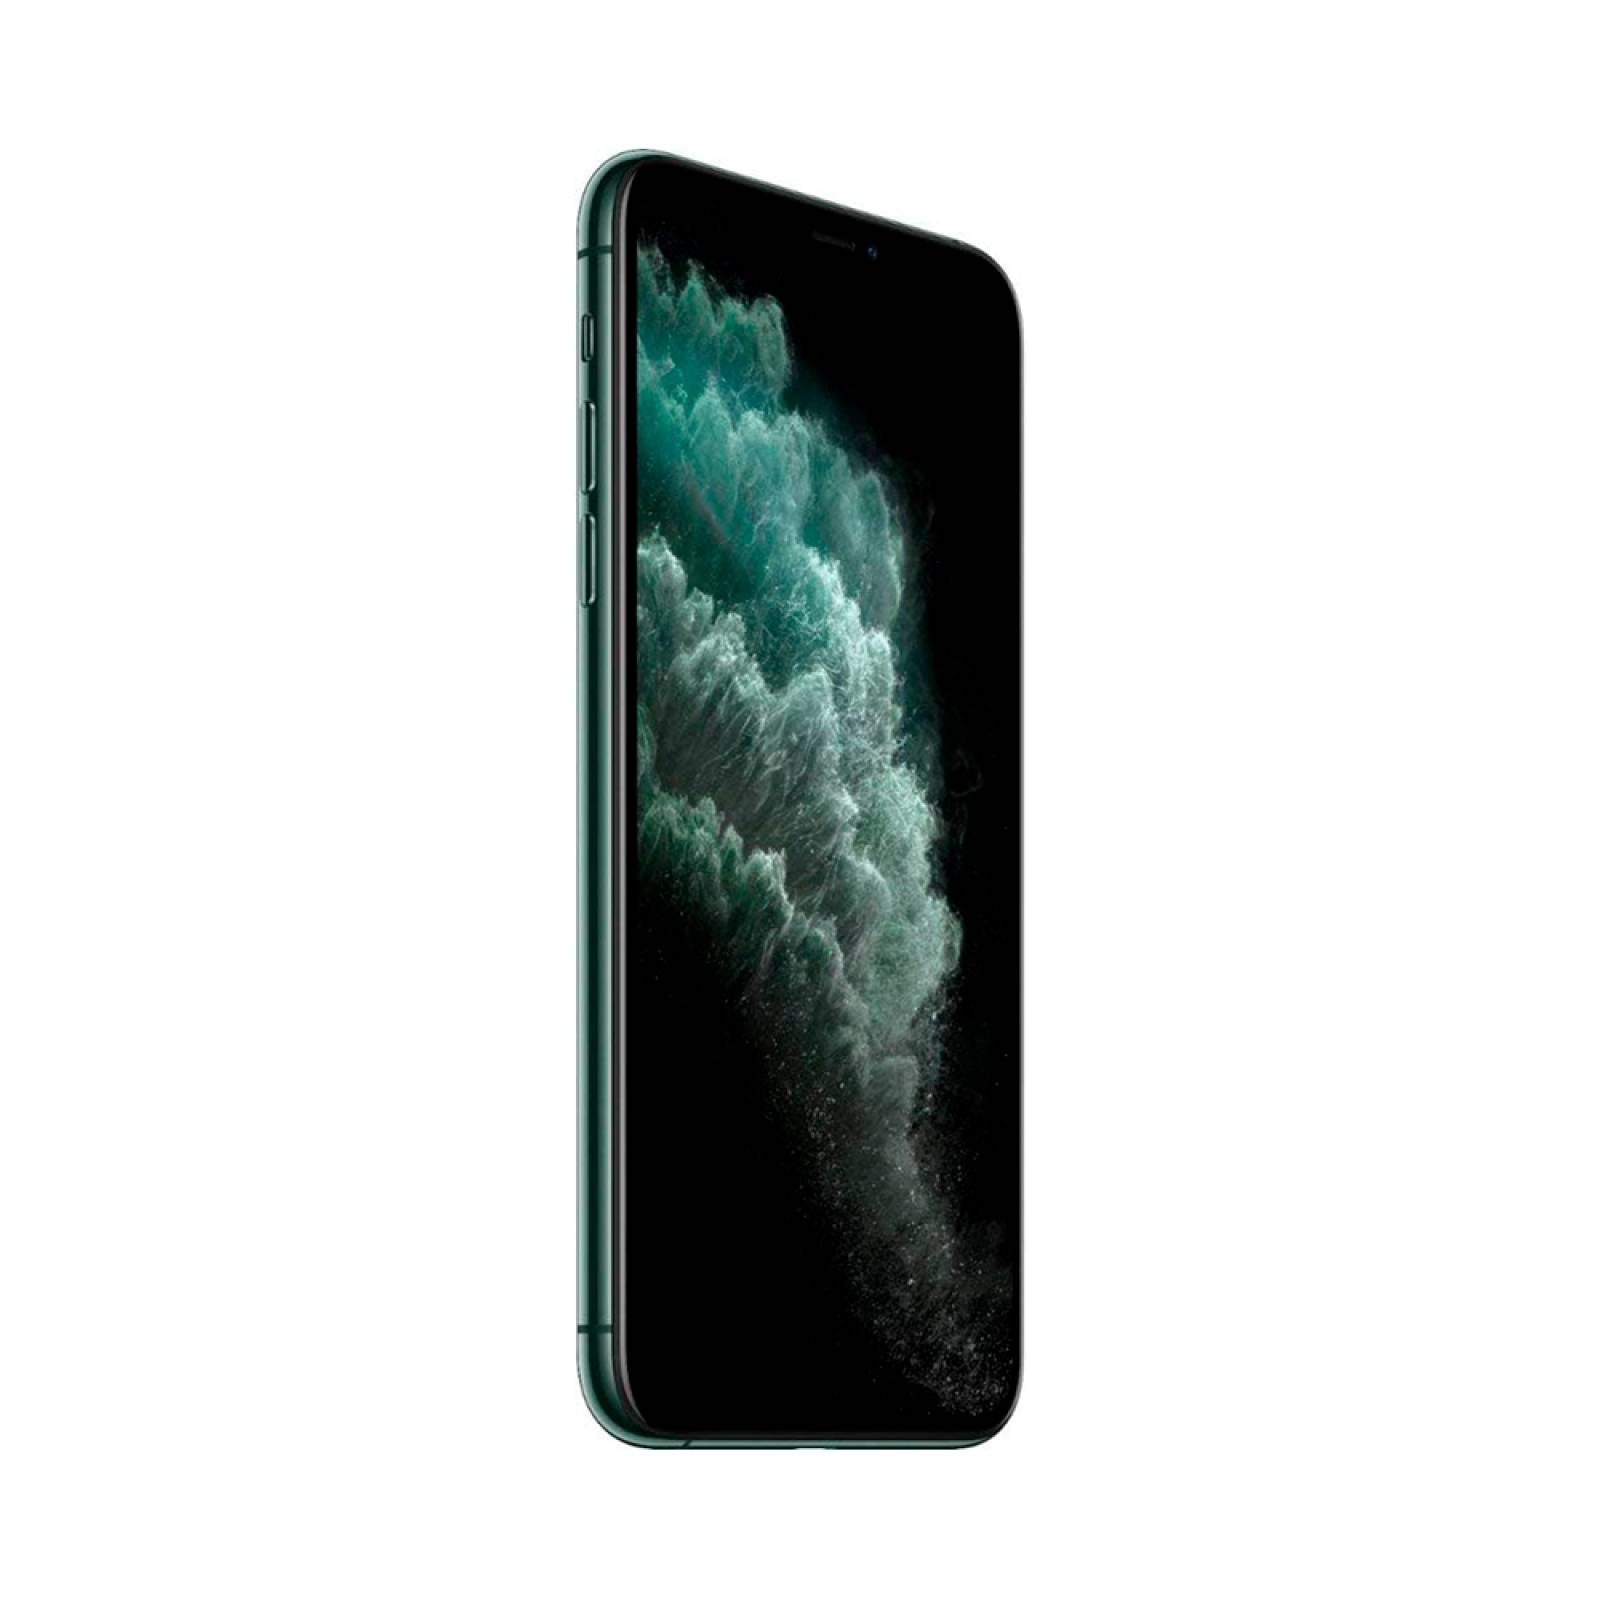 iPhone 11 Pro Apple 256 GB Verde Reacondicionado